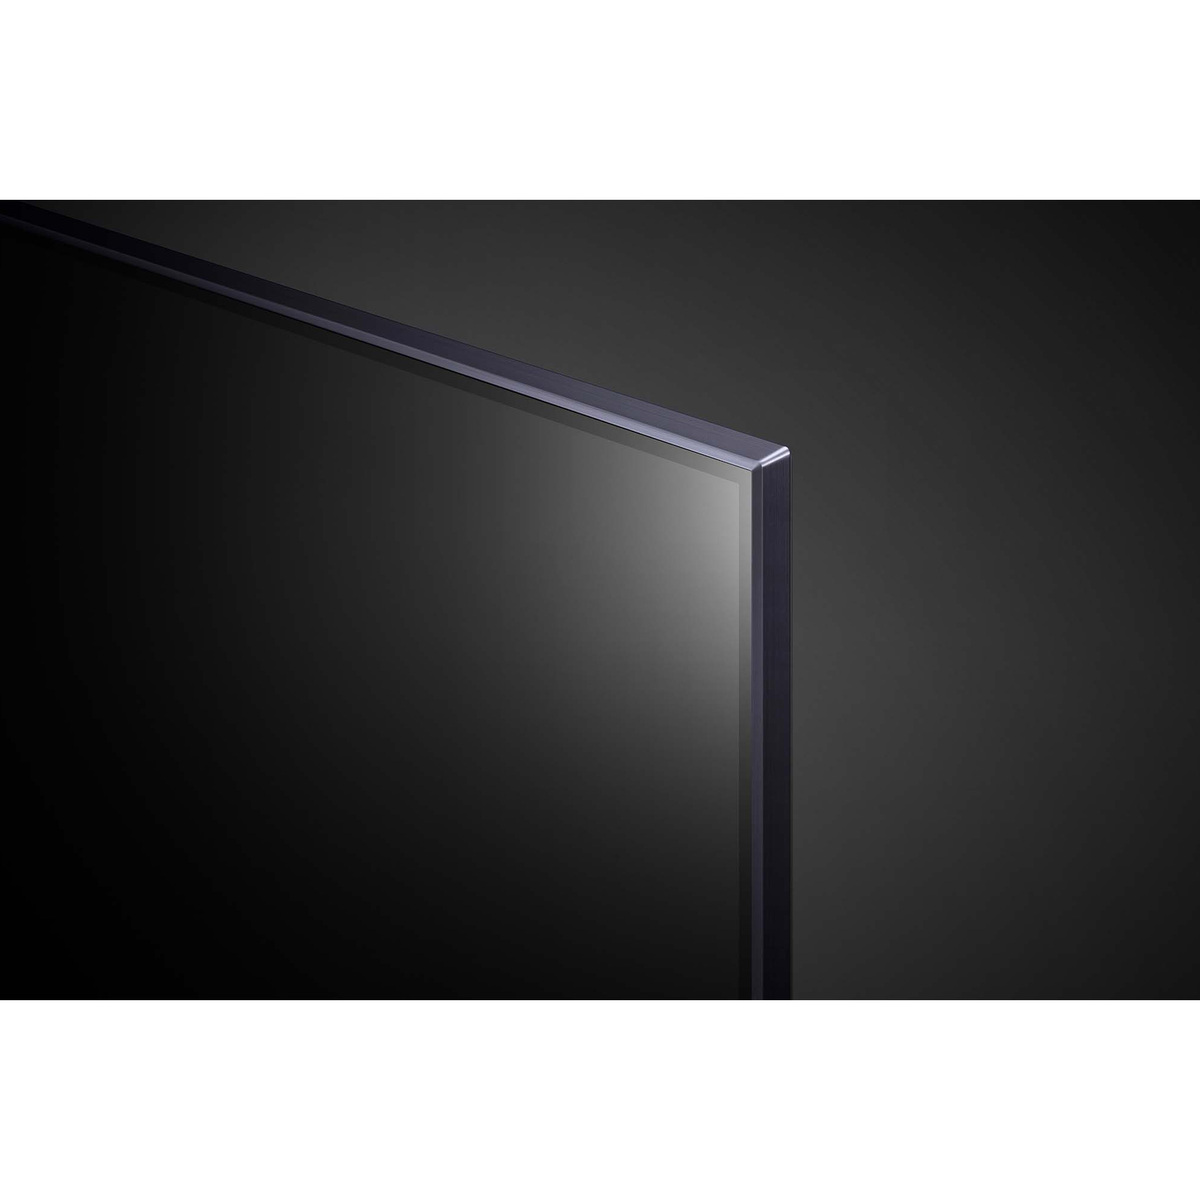 LG NanoCell TV 55 inch NANO84 Series, New 2022, Cinema Screen Design 4K Active HDR webOS22 with ThinQ AI - 55NANO846QA